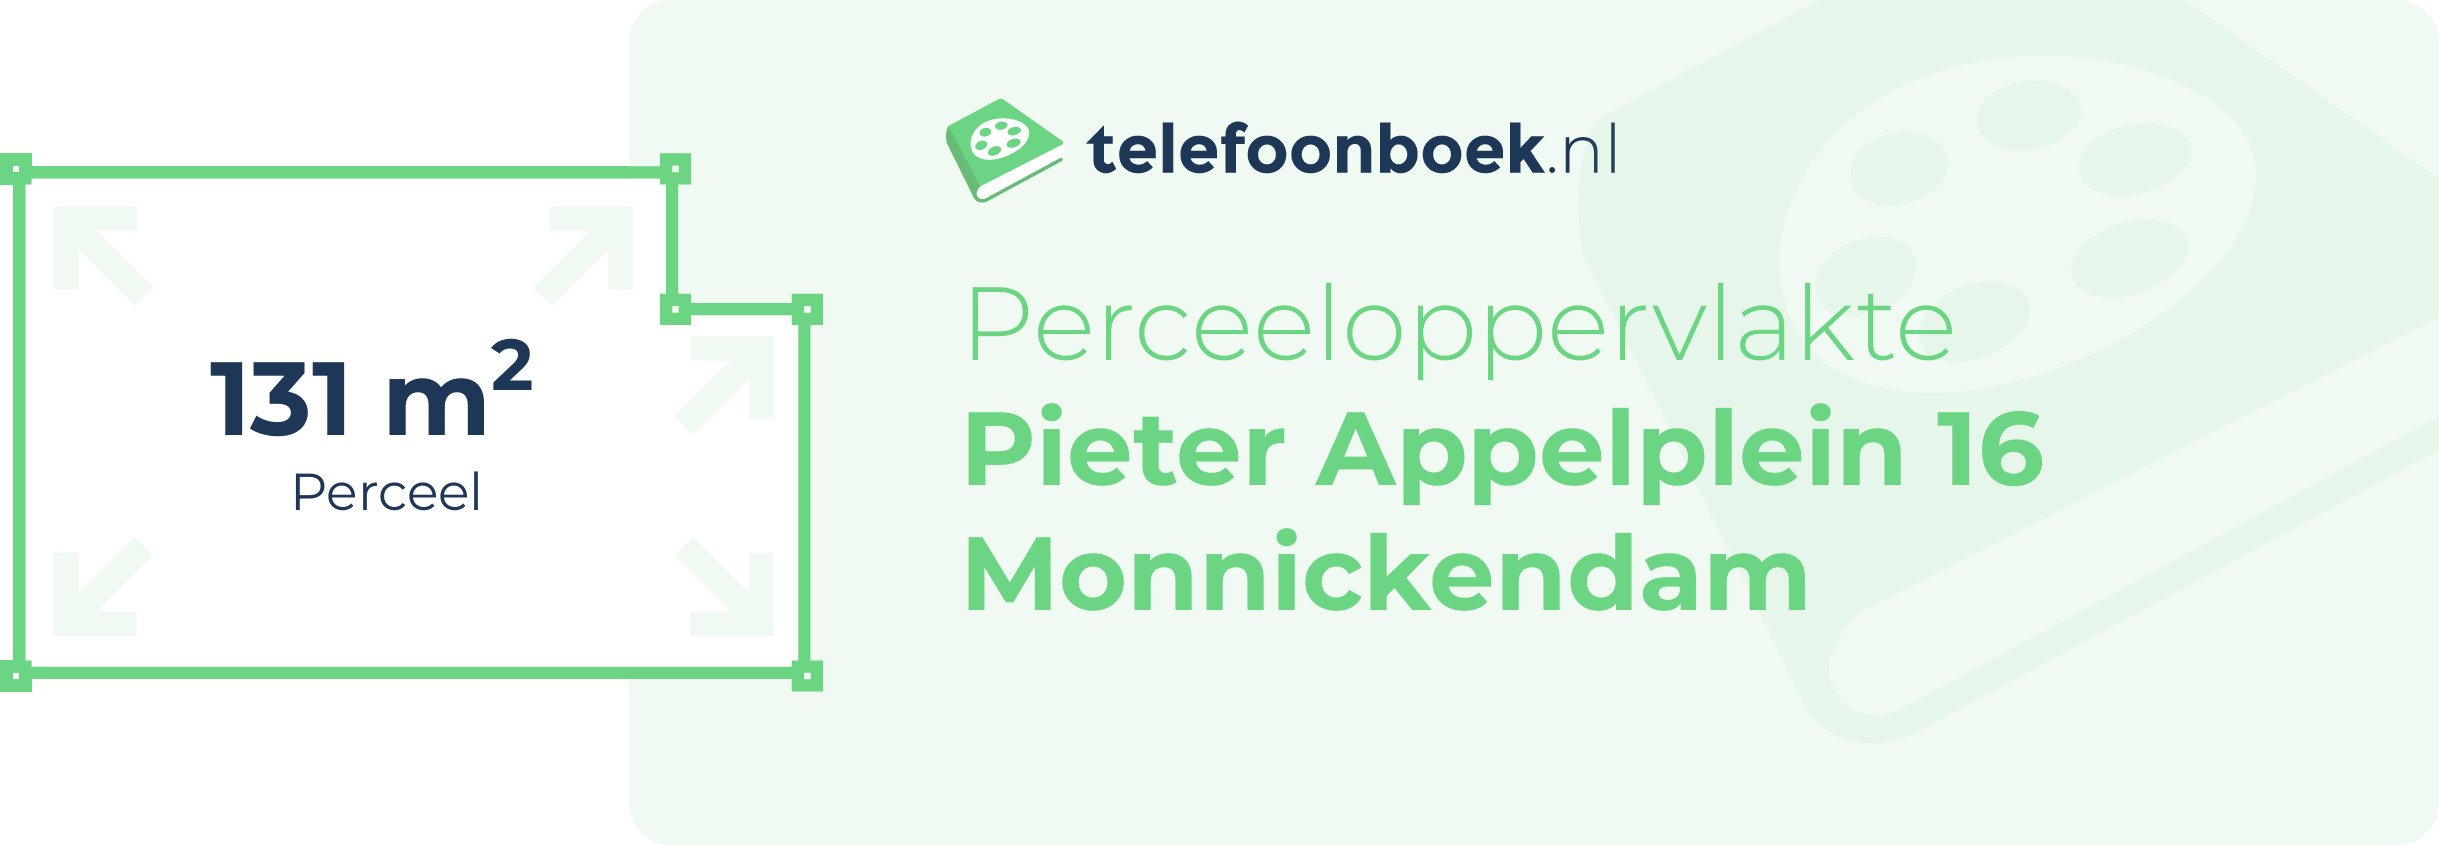 Perceeloppervlakte Pieter Appelplein 16 Monnickendam